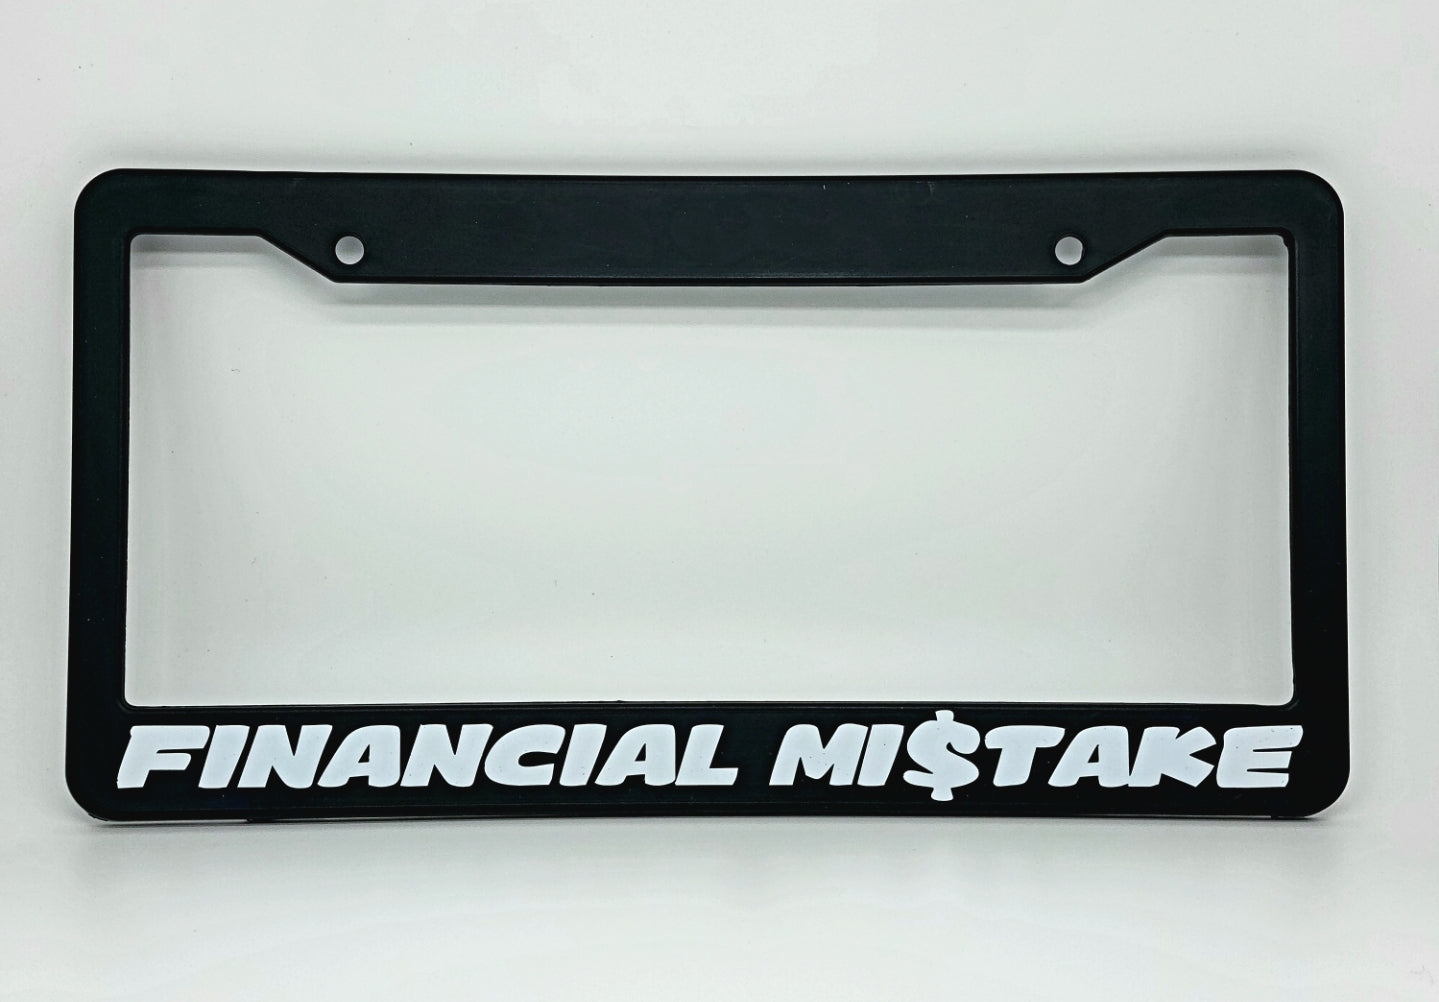 FINANCIAL MISTAKE (Plate Frame)